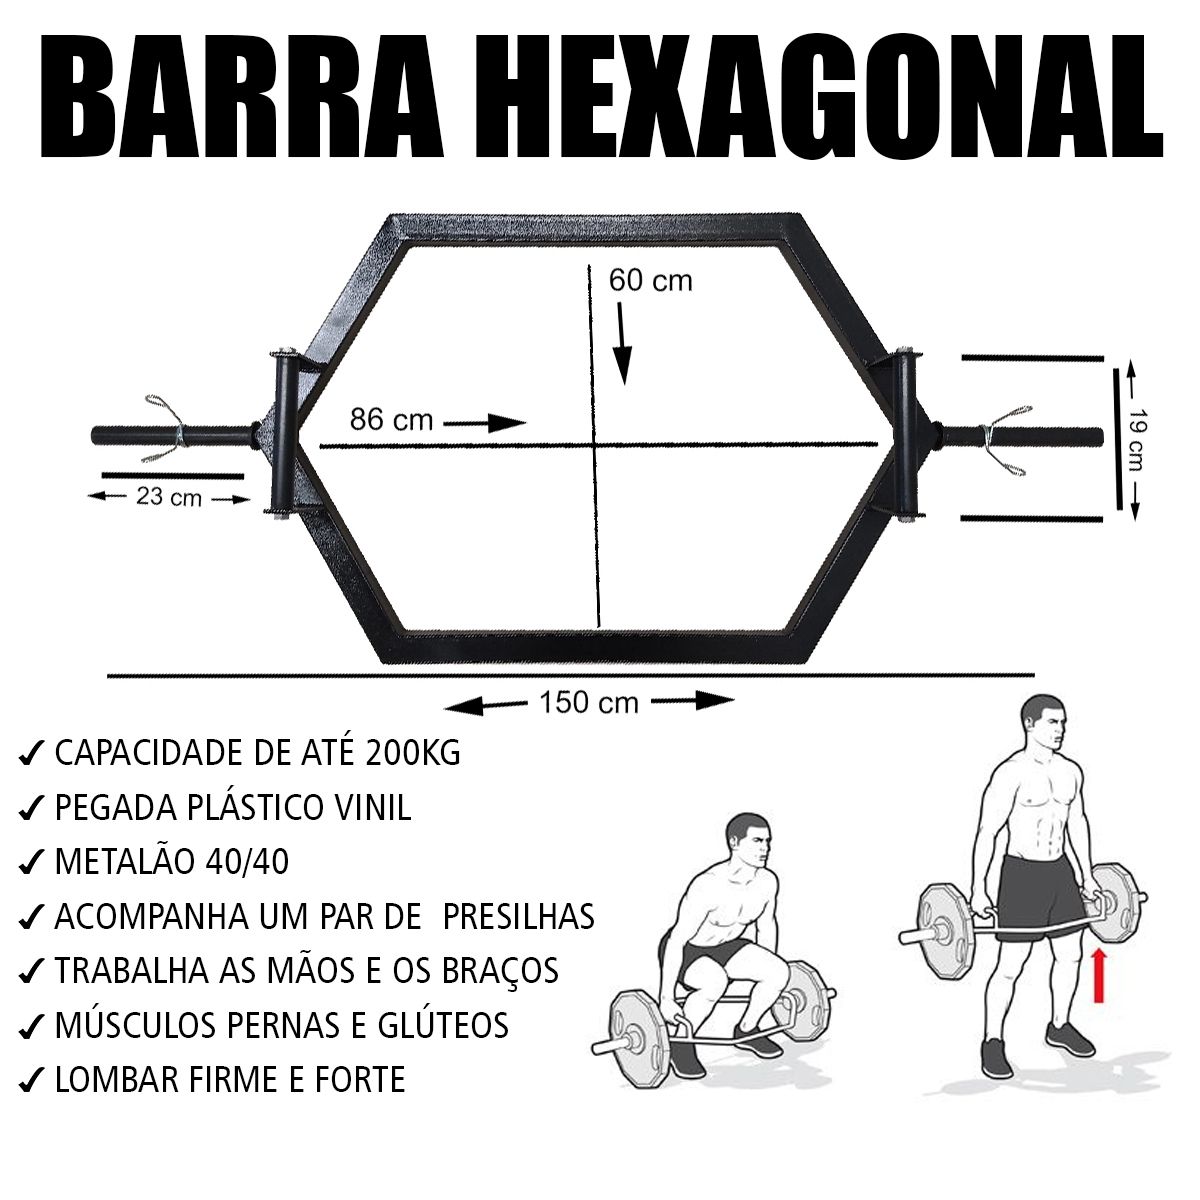 Barra Hexagonal, Para Que Serve? - Fidje Equipamentos Crossfit